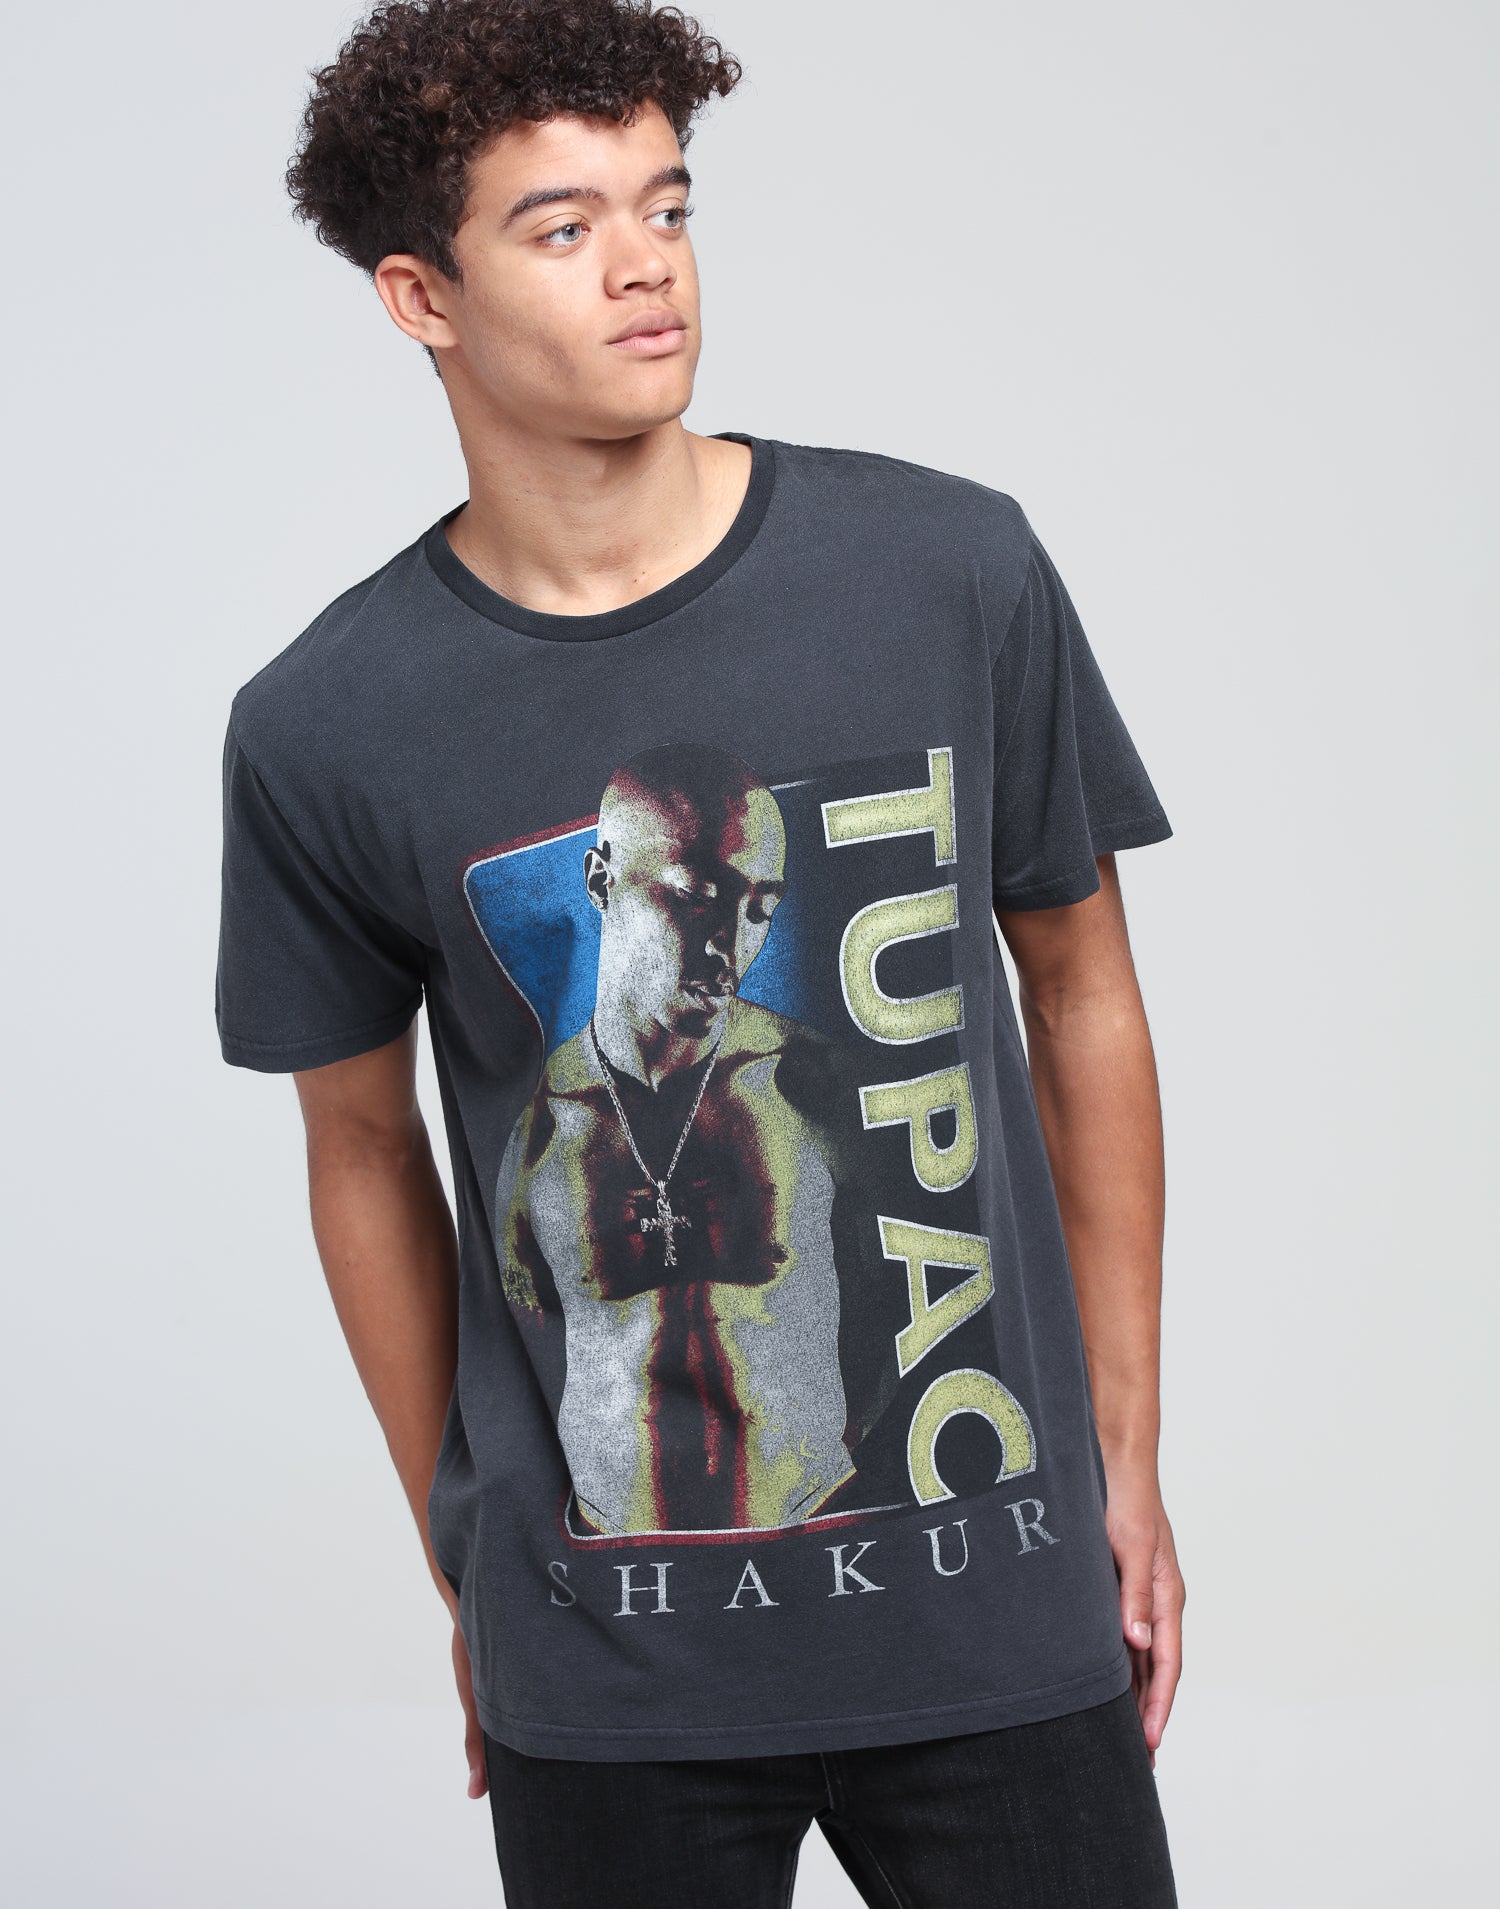 tupac lakers shirt